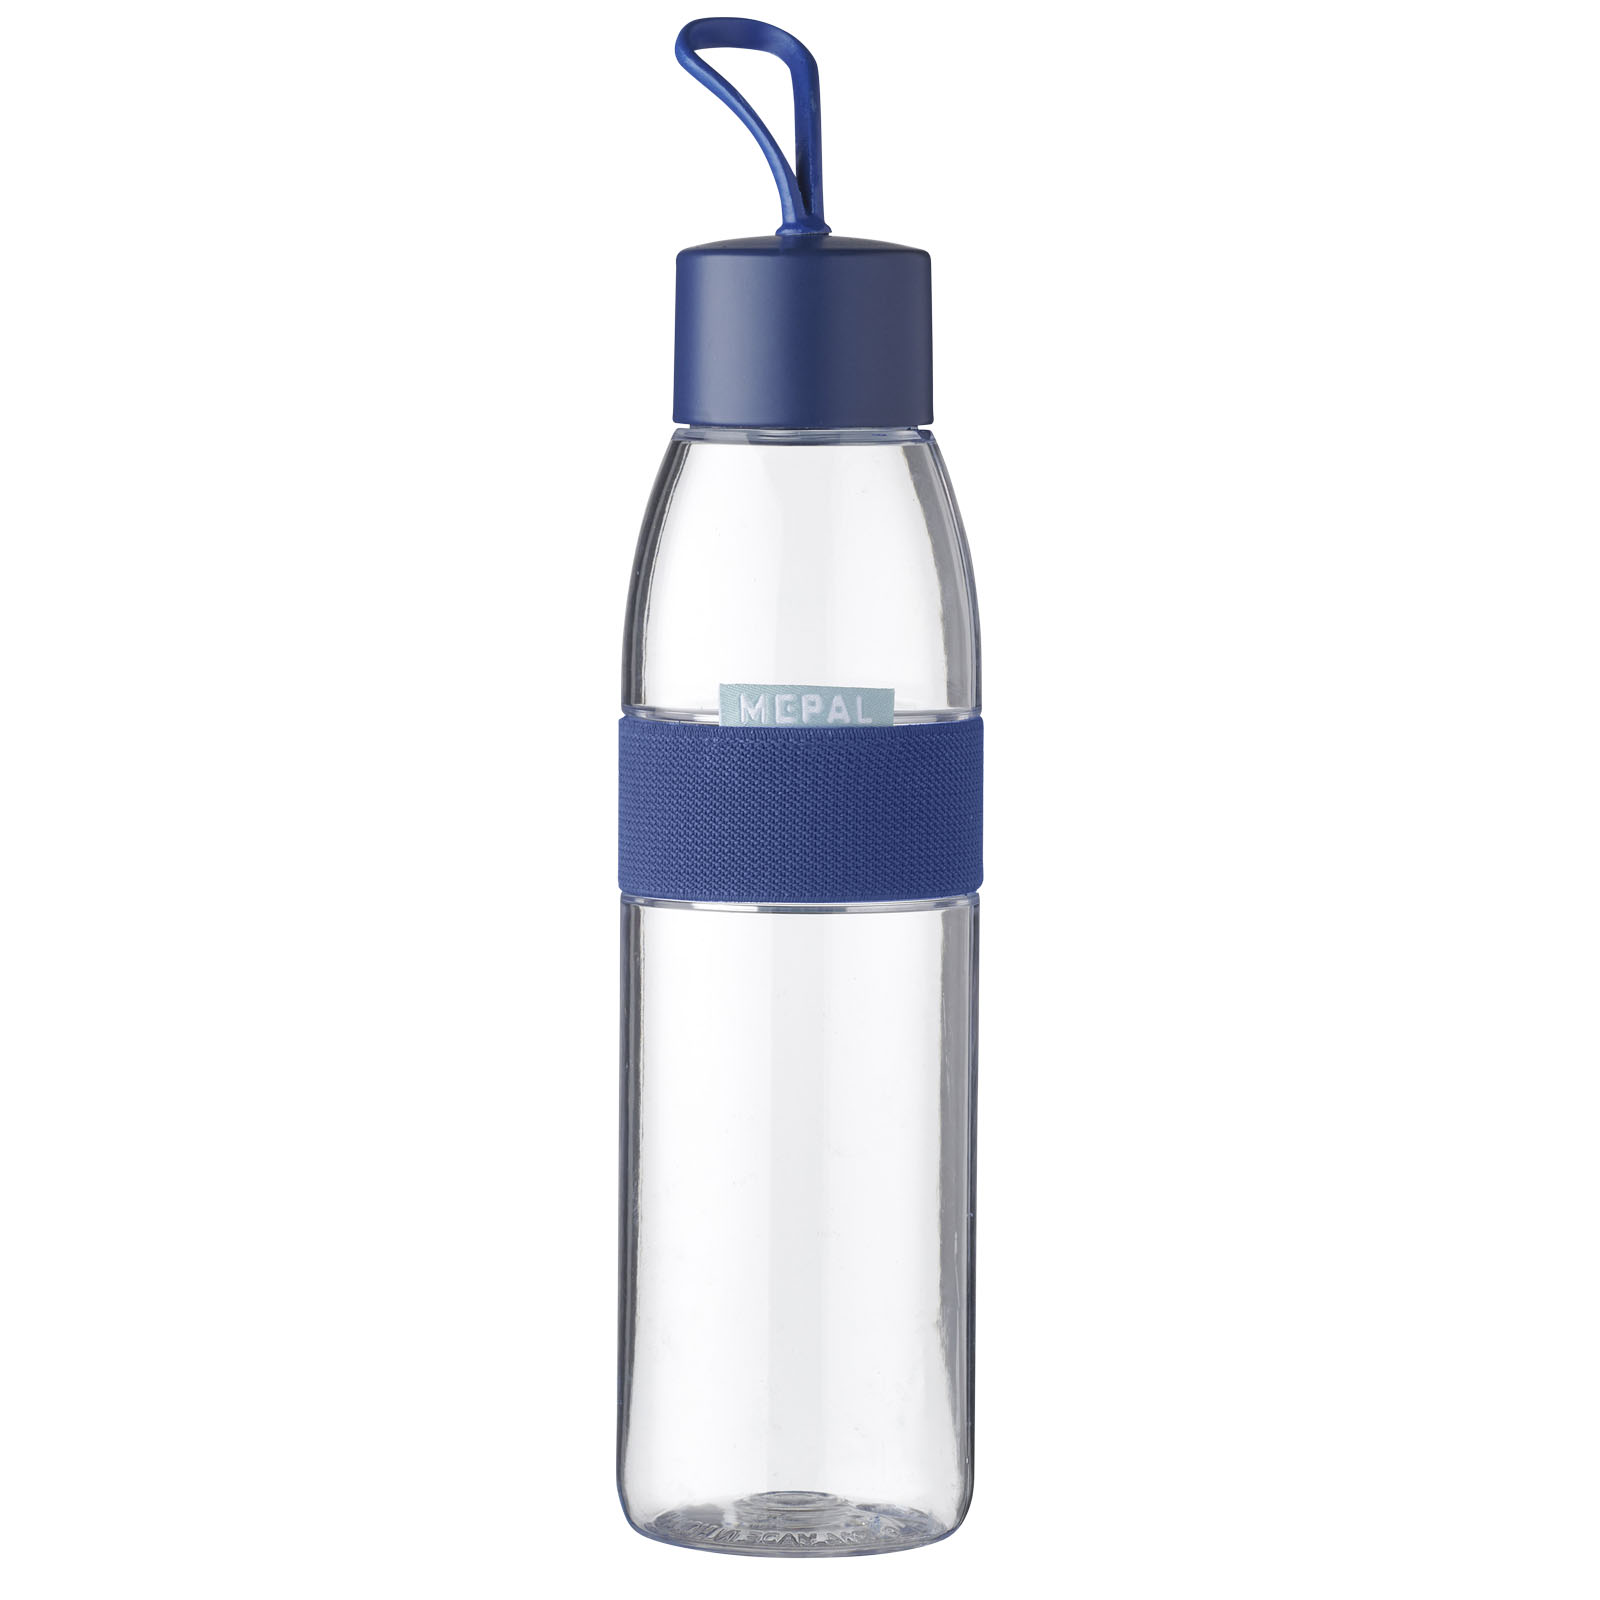 Advertising Water bottles - Mepal Ellipse 500 ml water bottle